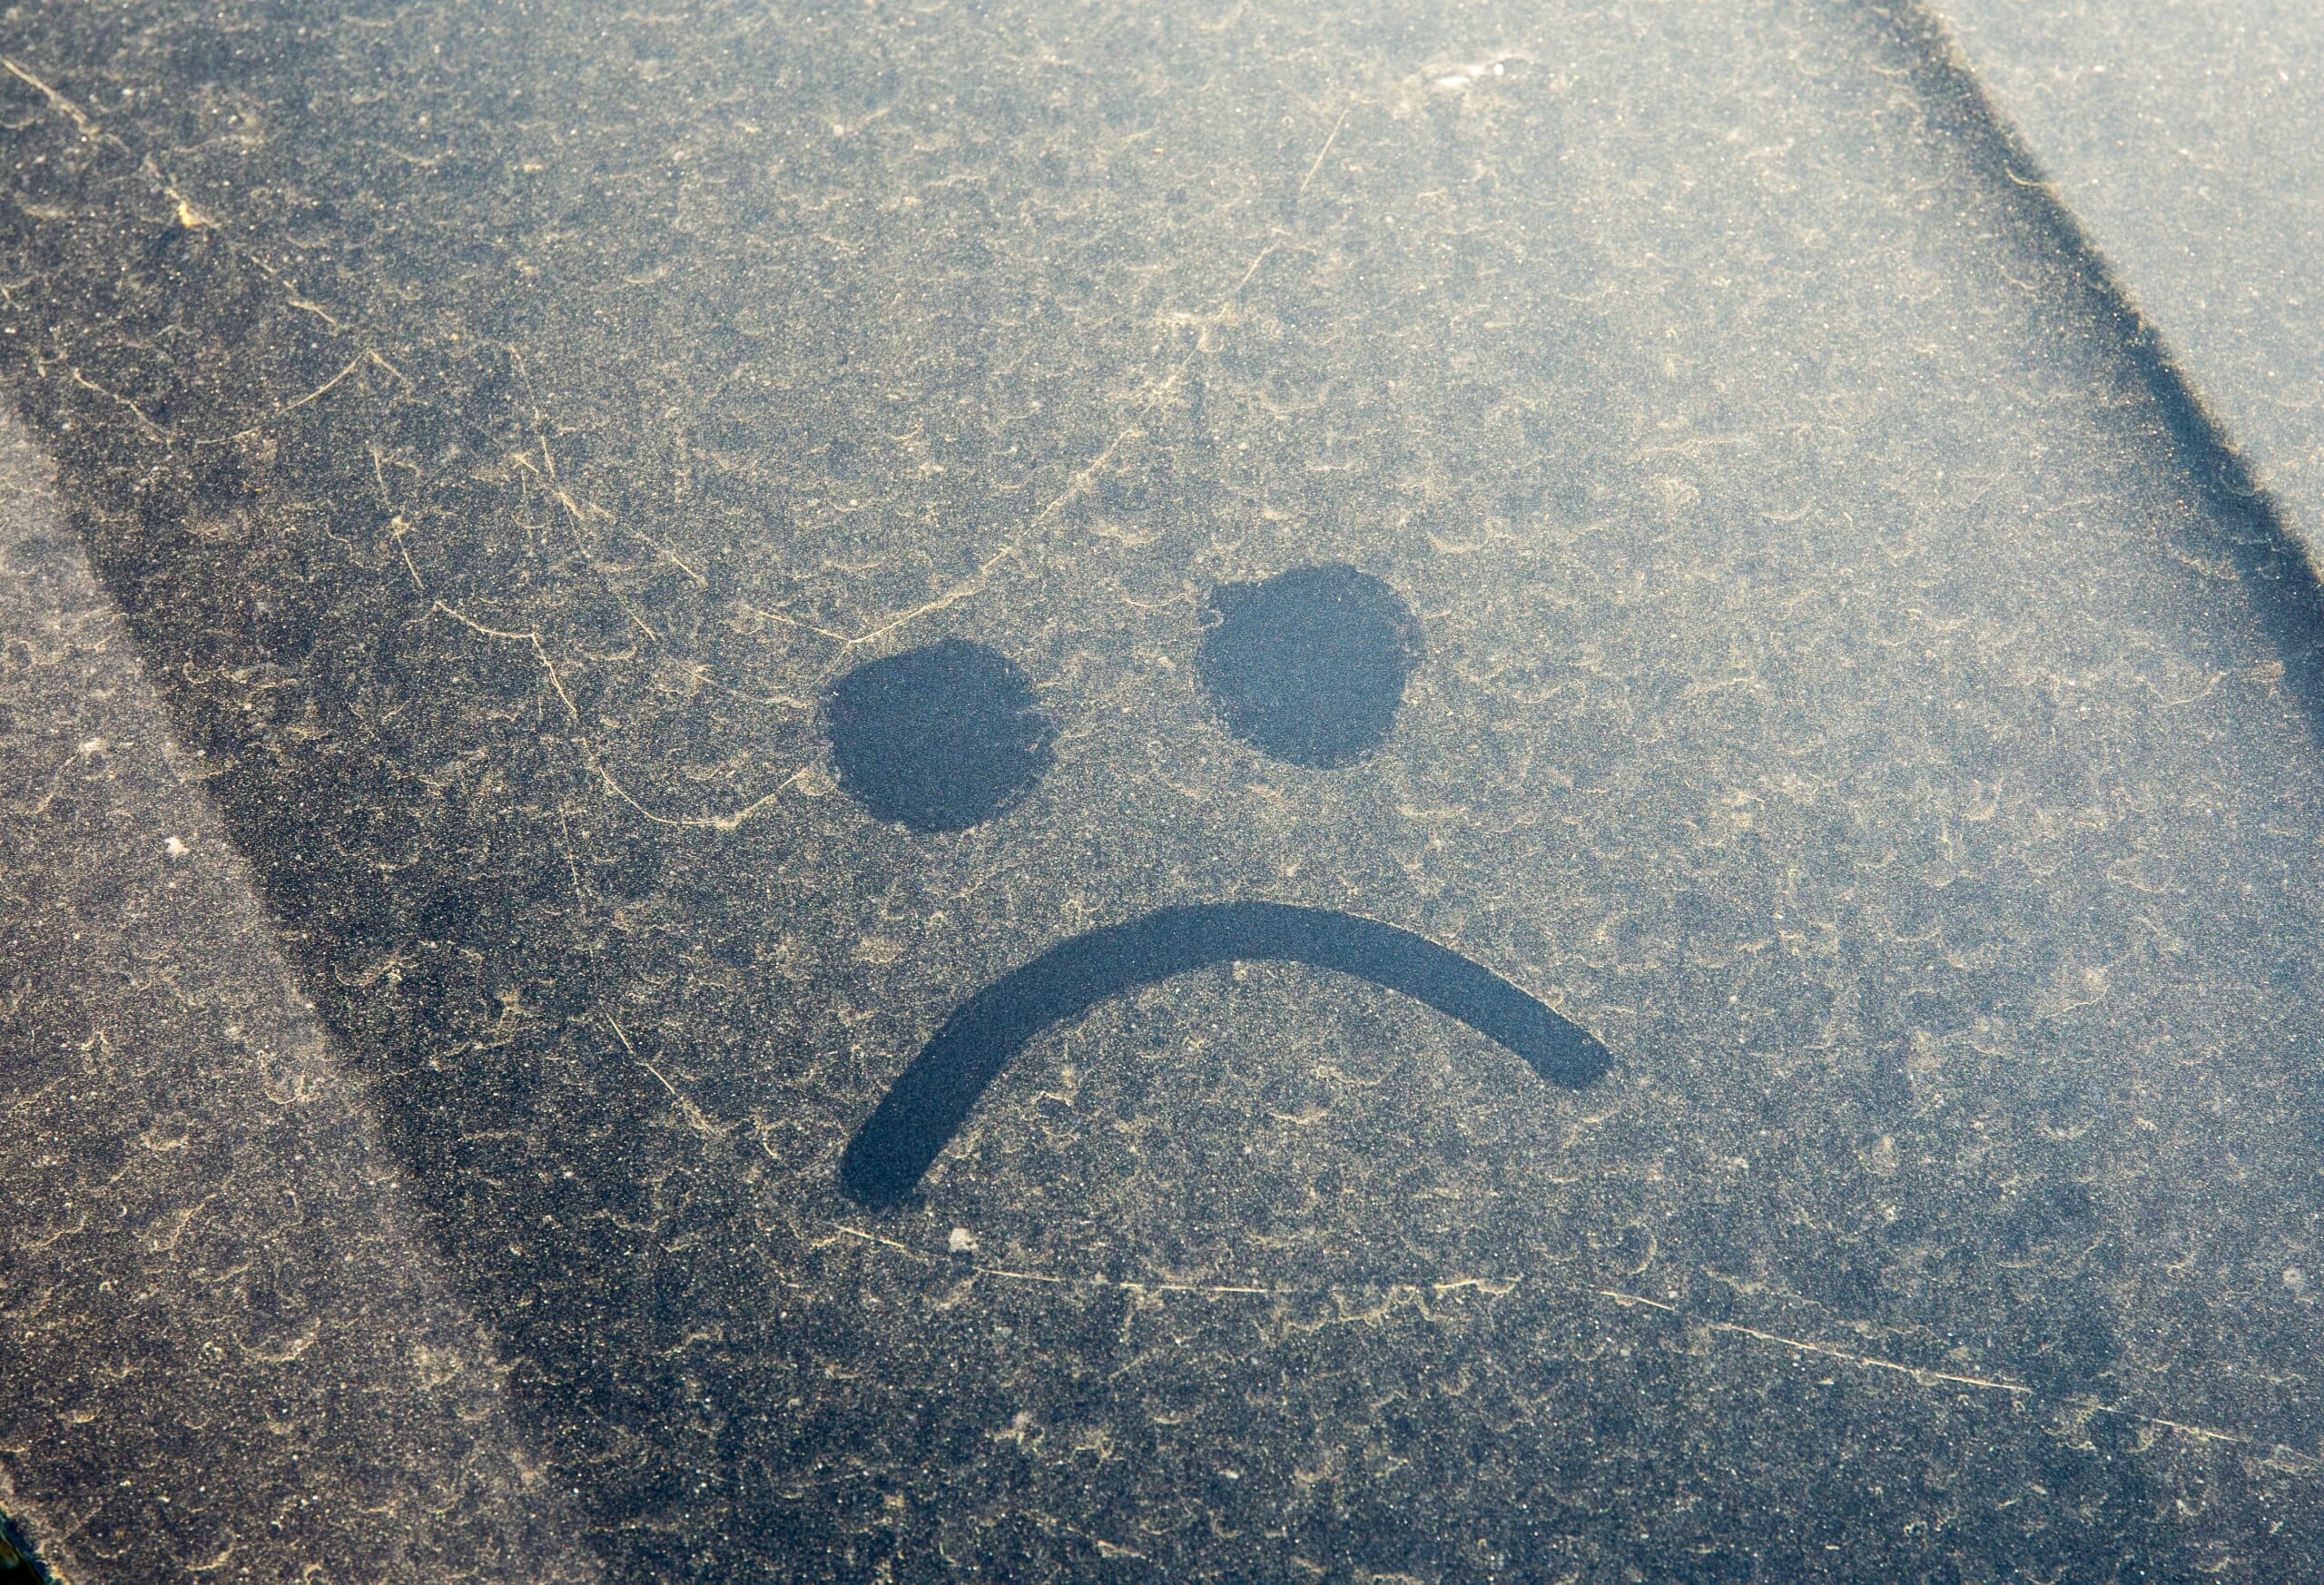 Sad face drawn in pollen covering a car's exterior.